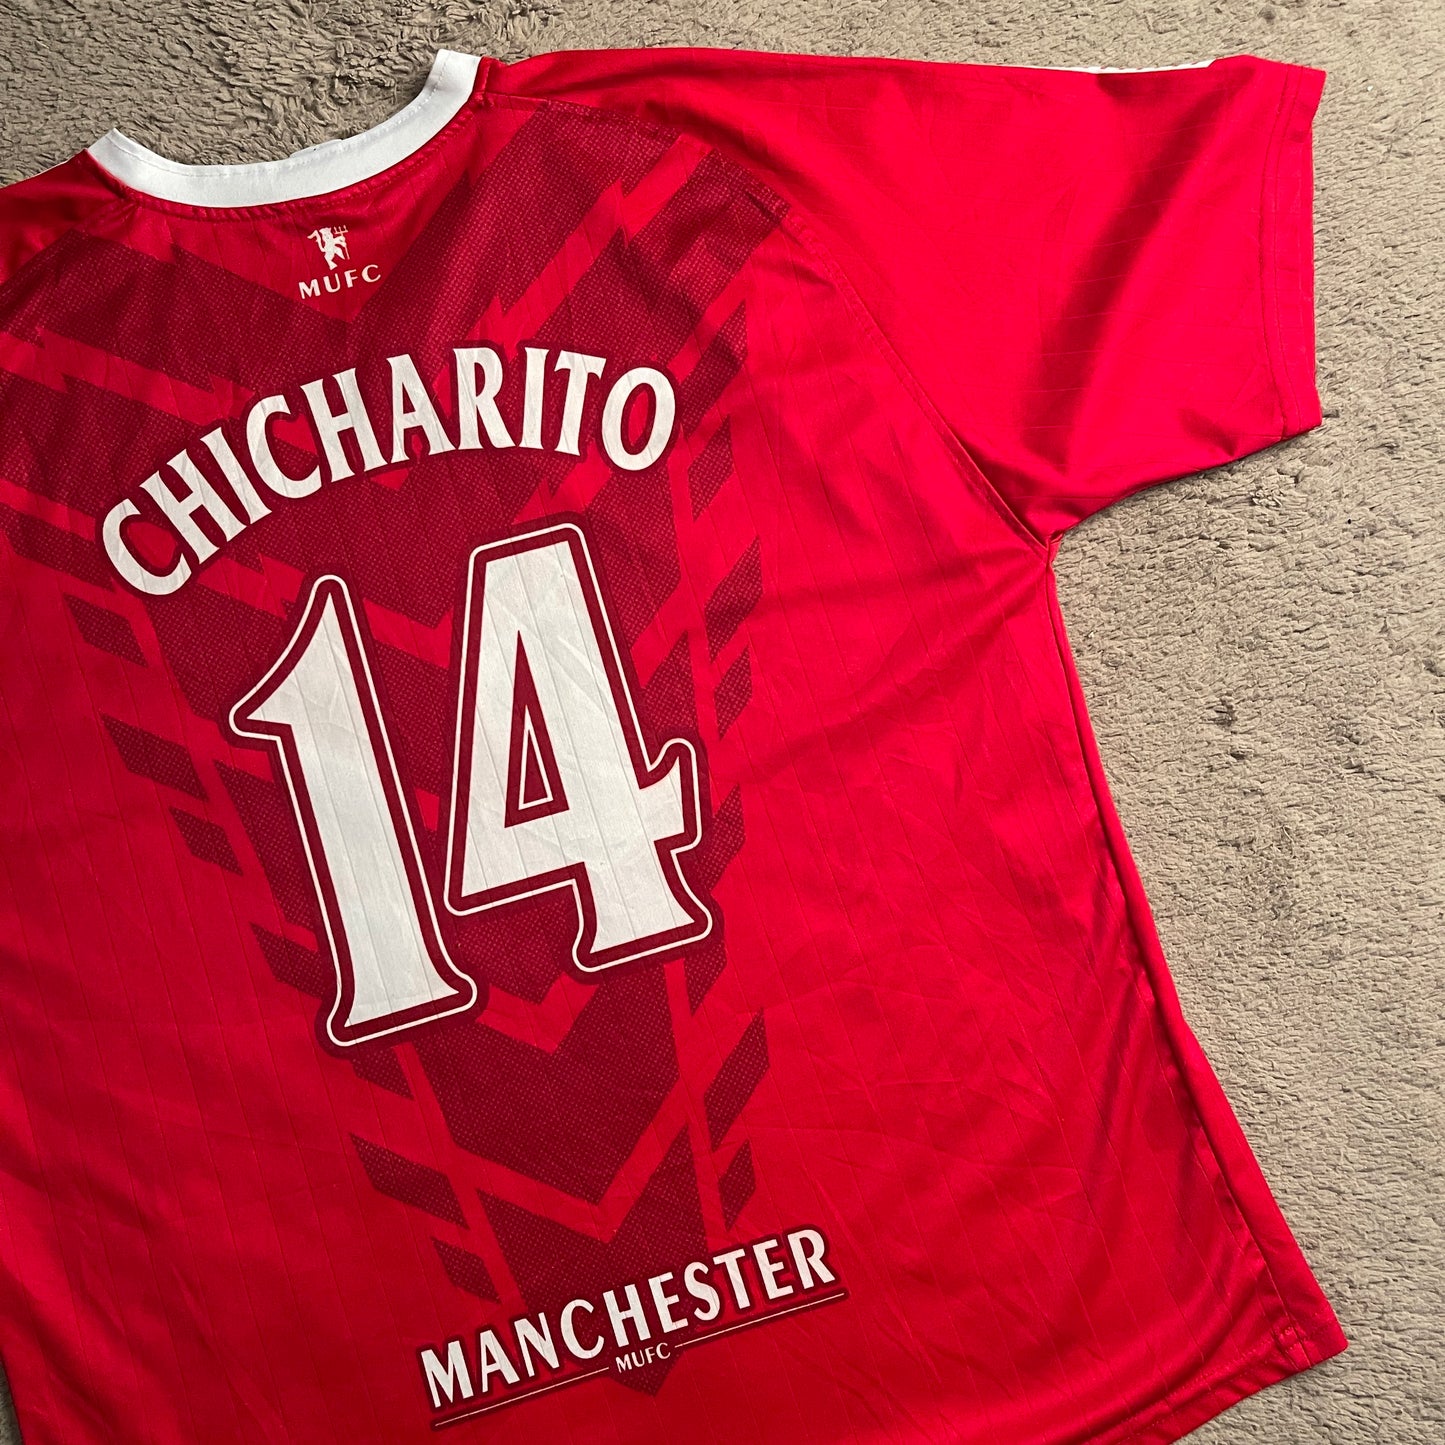 Manchester United #14 Chicharito Football Jersey (L)